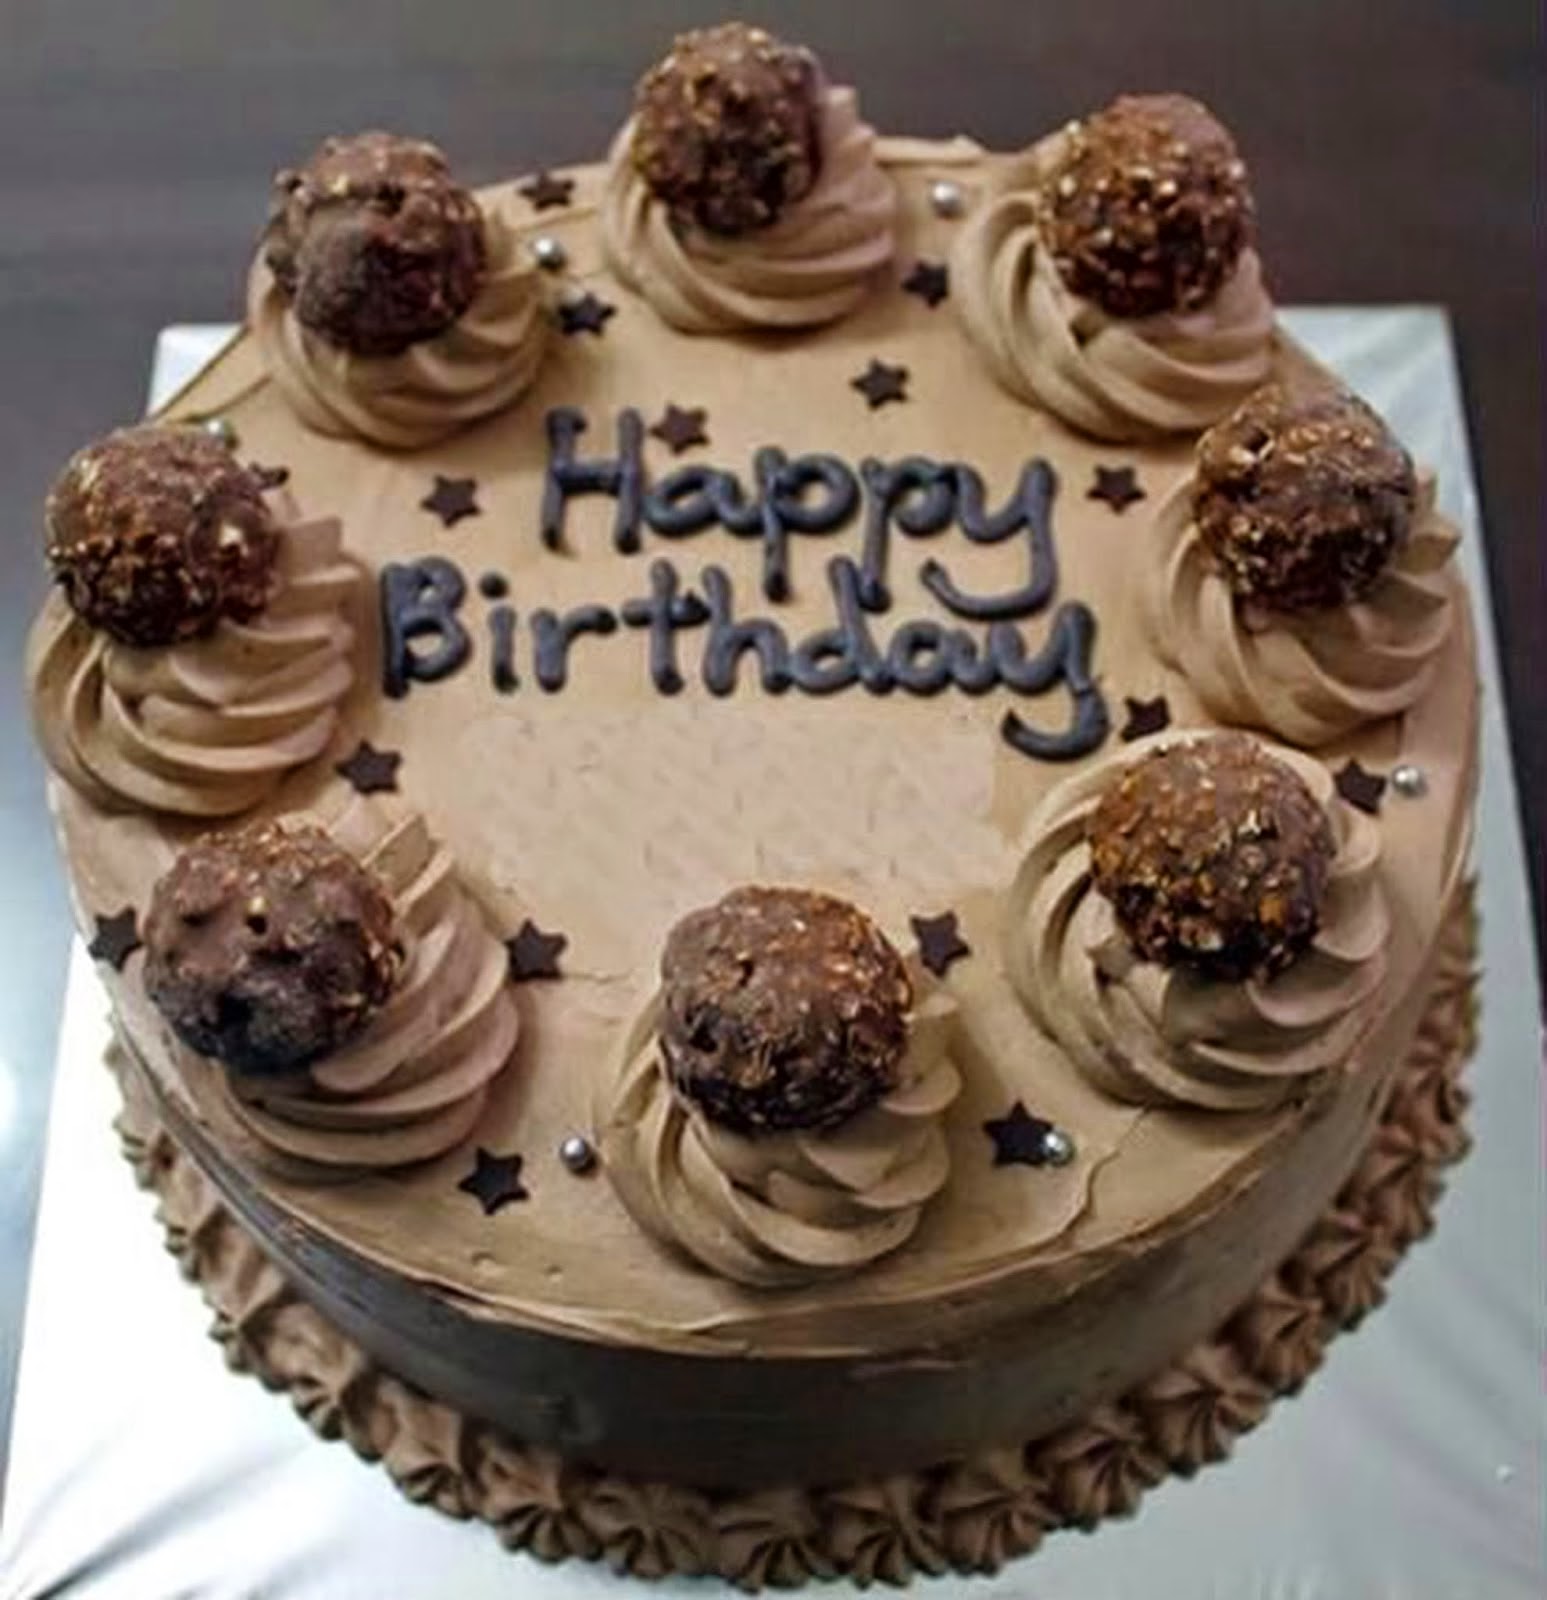 2017-happy-birthday-chocolate-cake-image